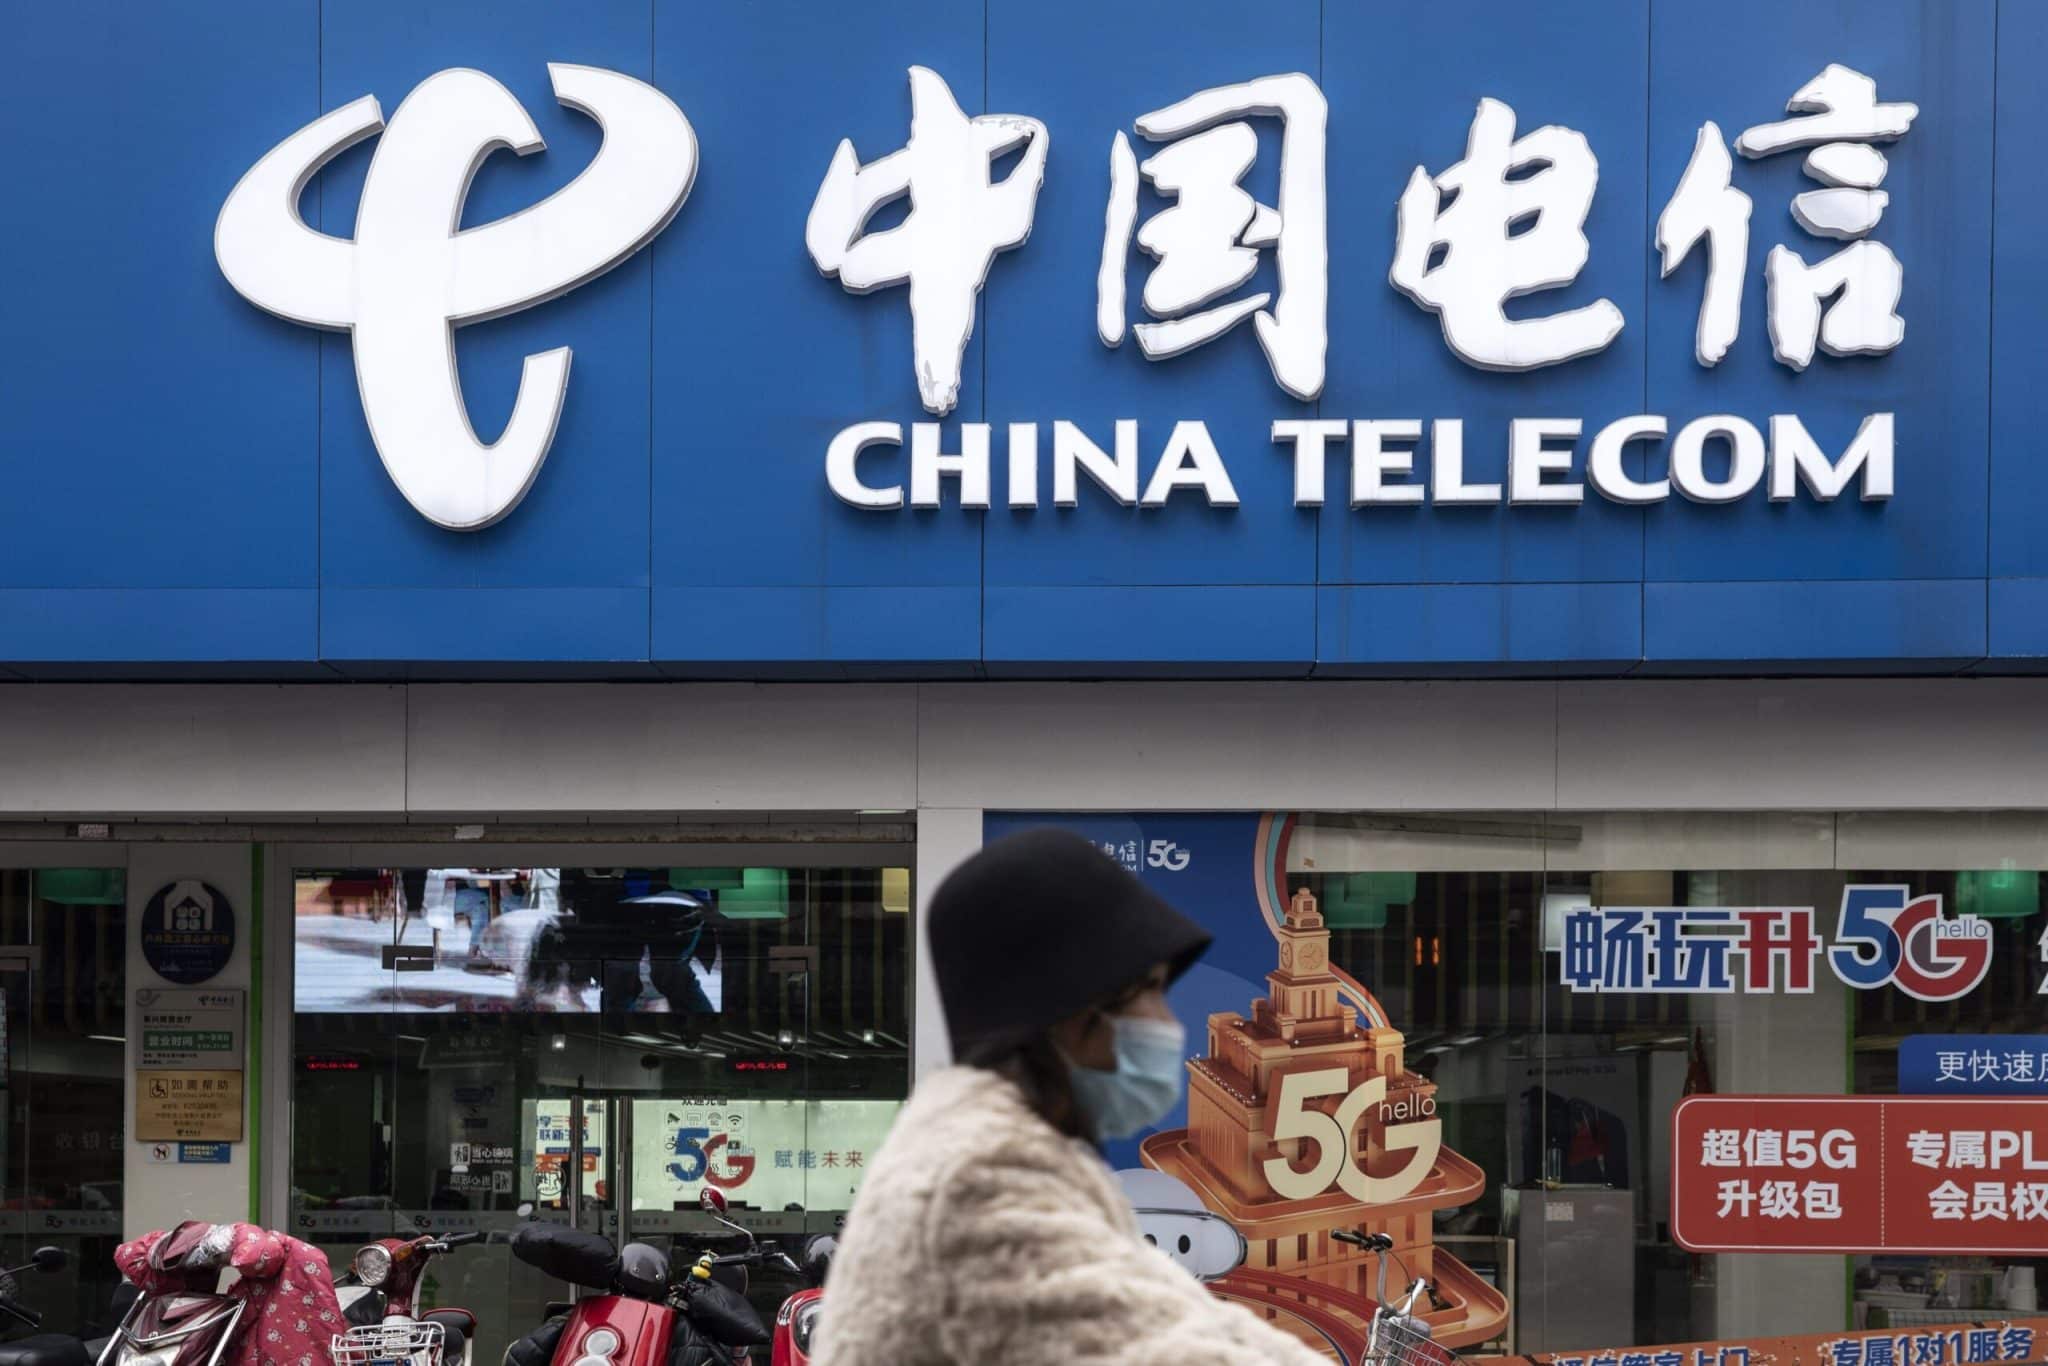 US revokes China Telecom's license